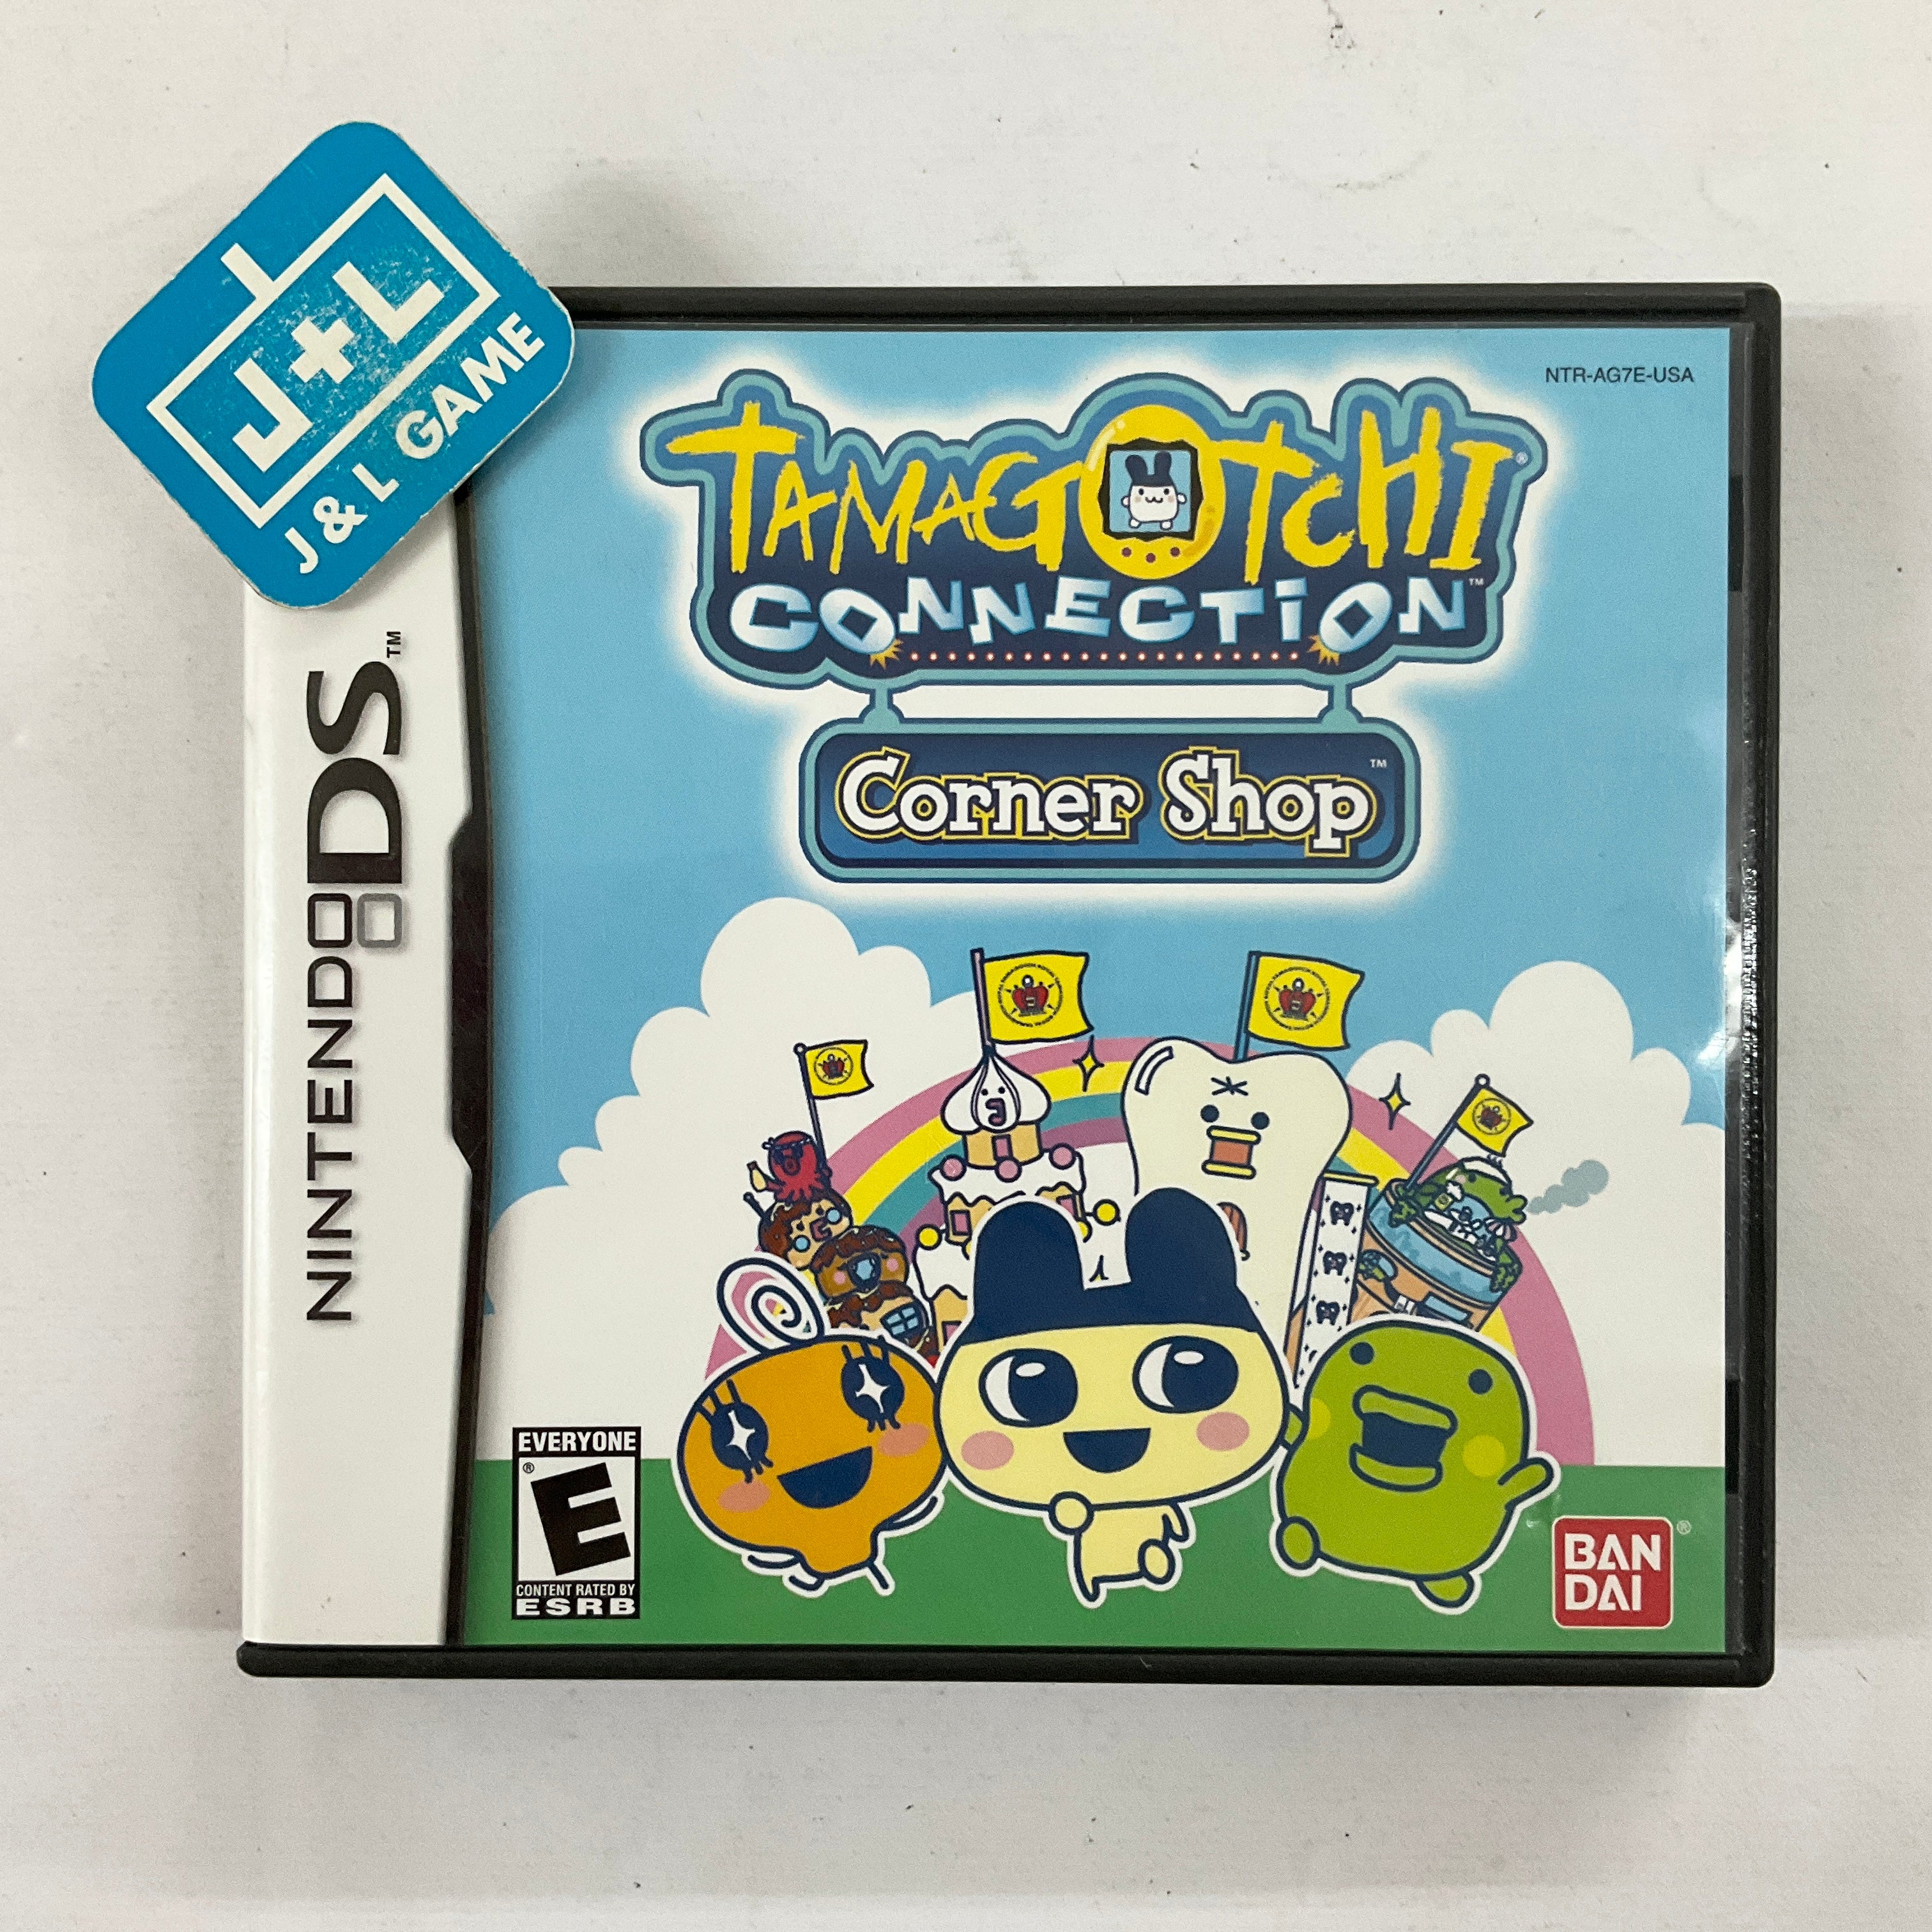 Tamagotchi Connection: Corner Shop - (NDS) Nintendo DS [Pre-Owned]